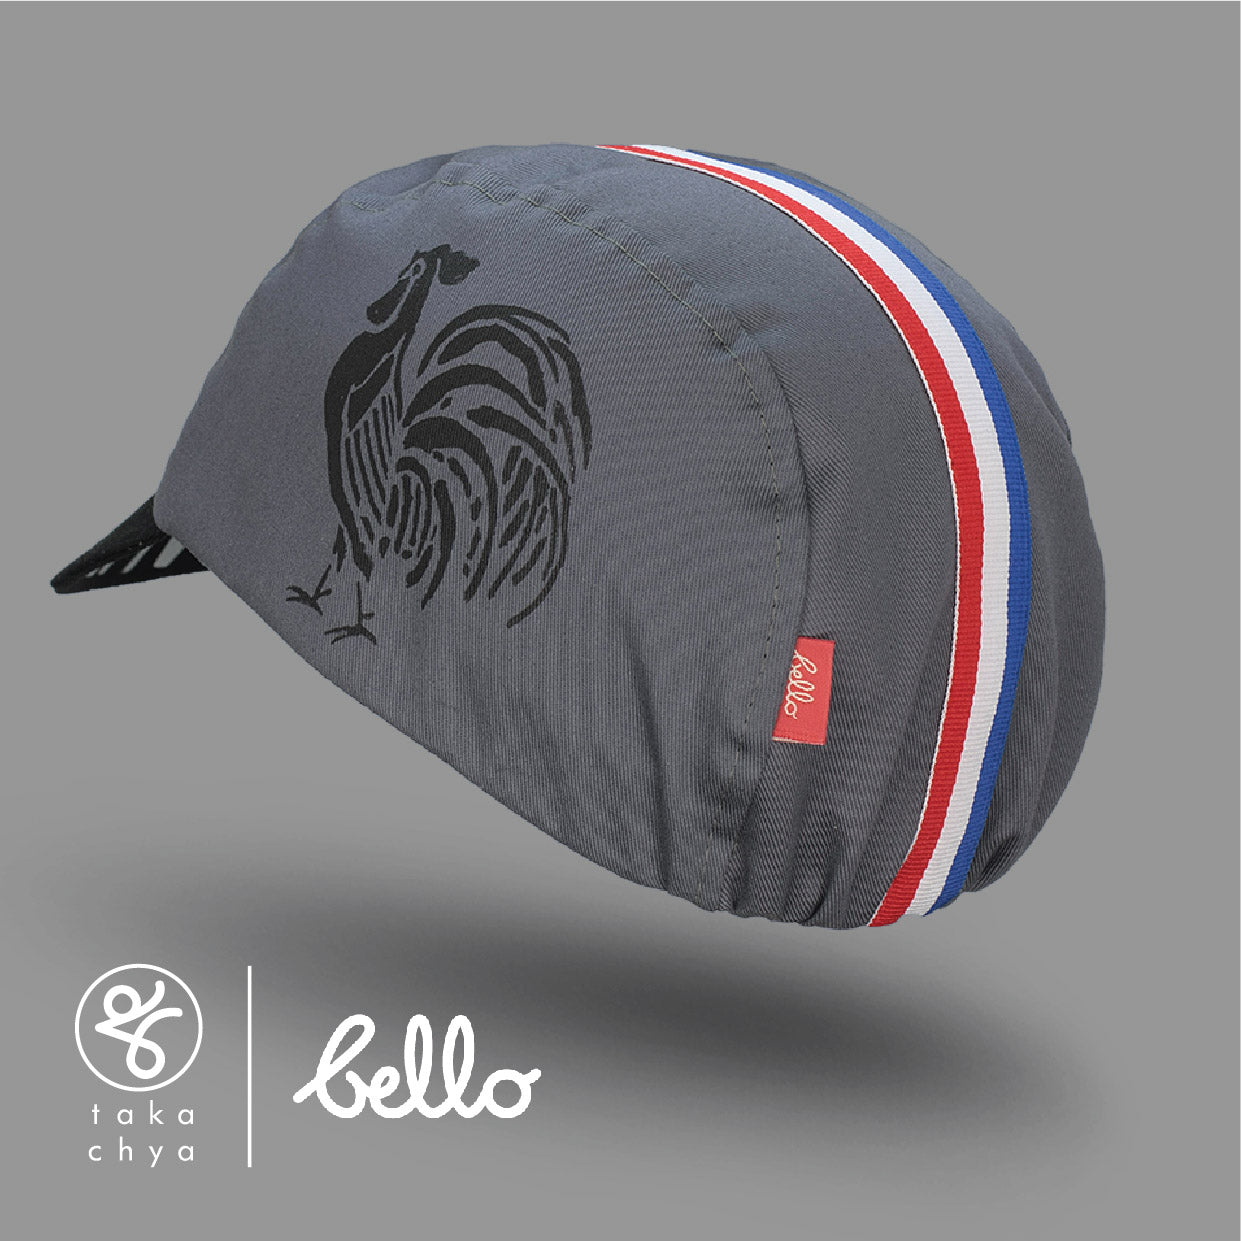 Le Pédalier - Bello Cyclist Designer Collaboration Cycling Cap